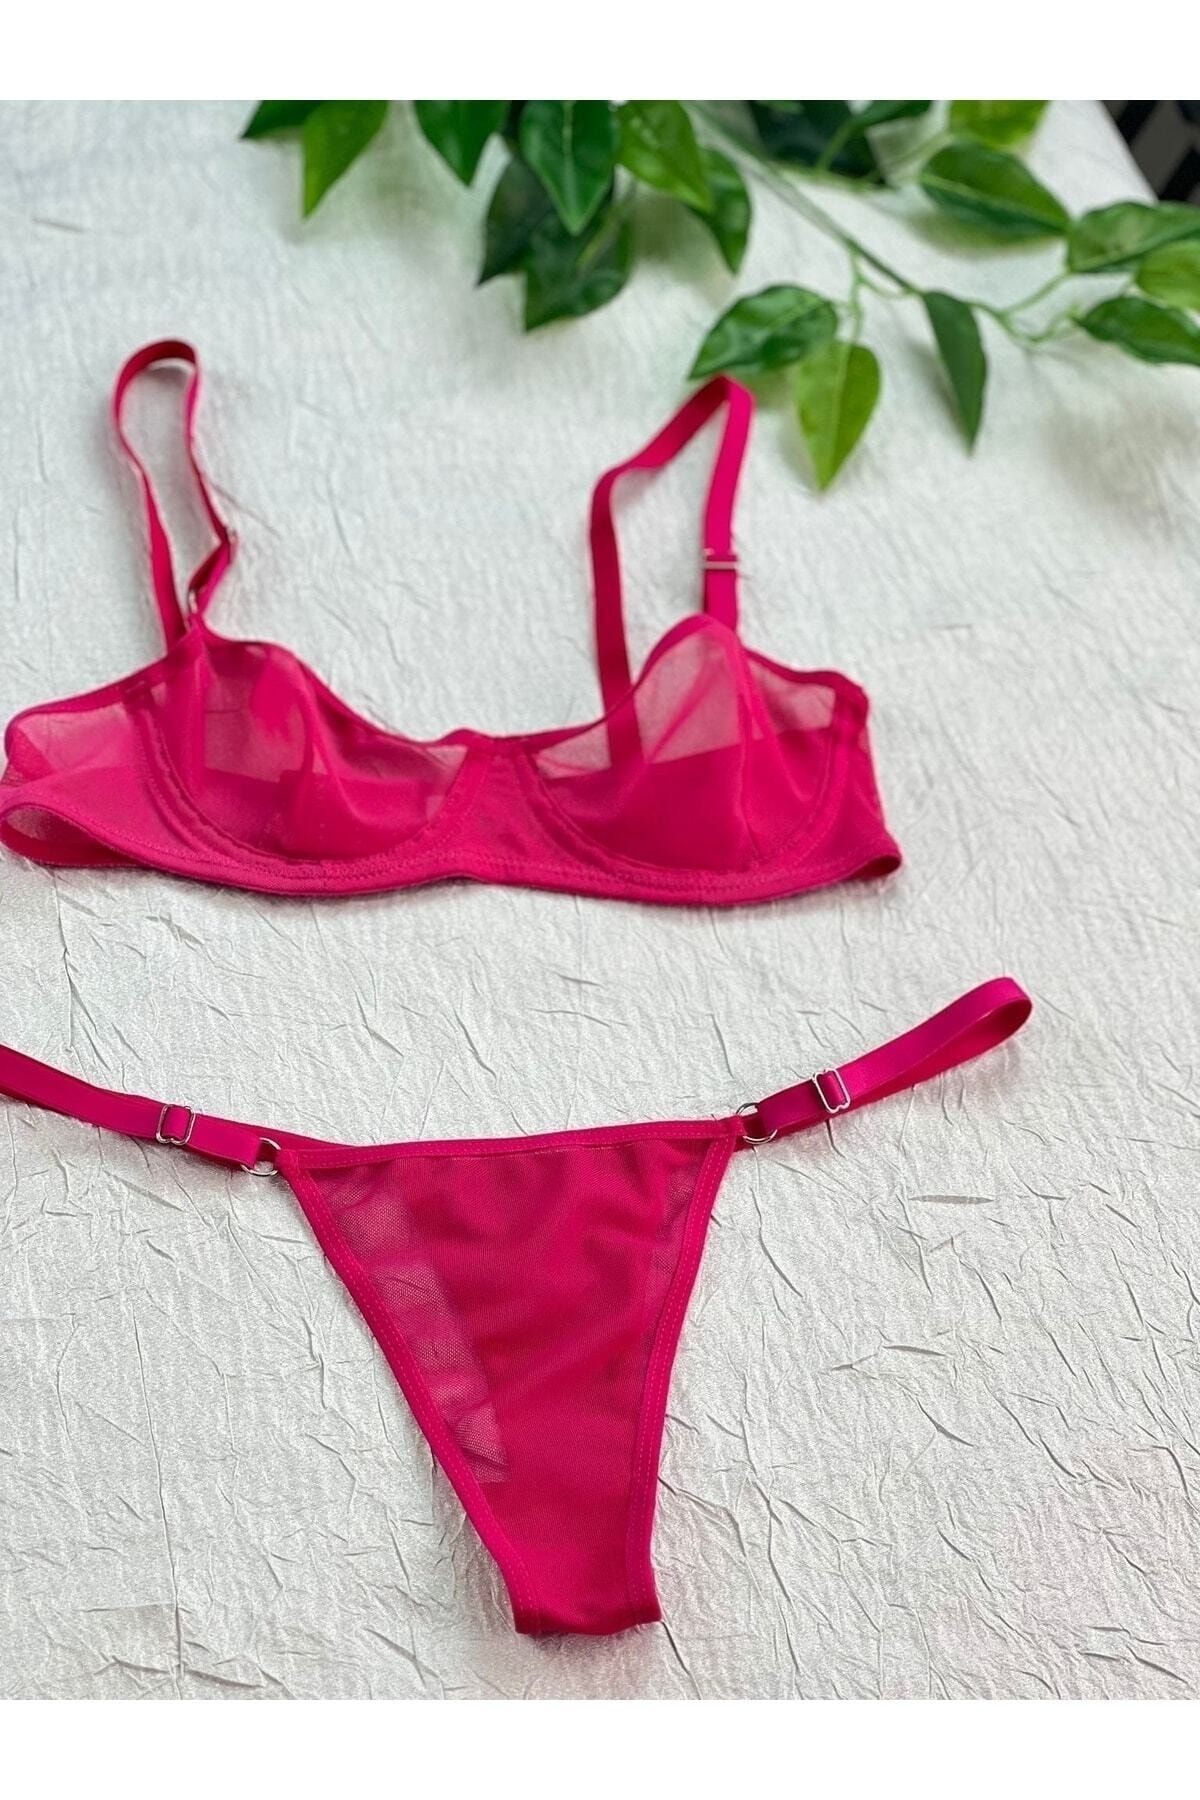 Victoria's secrets pink bra and knickers panties set - Depop